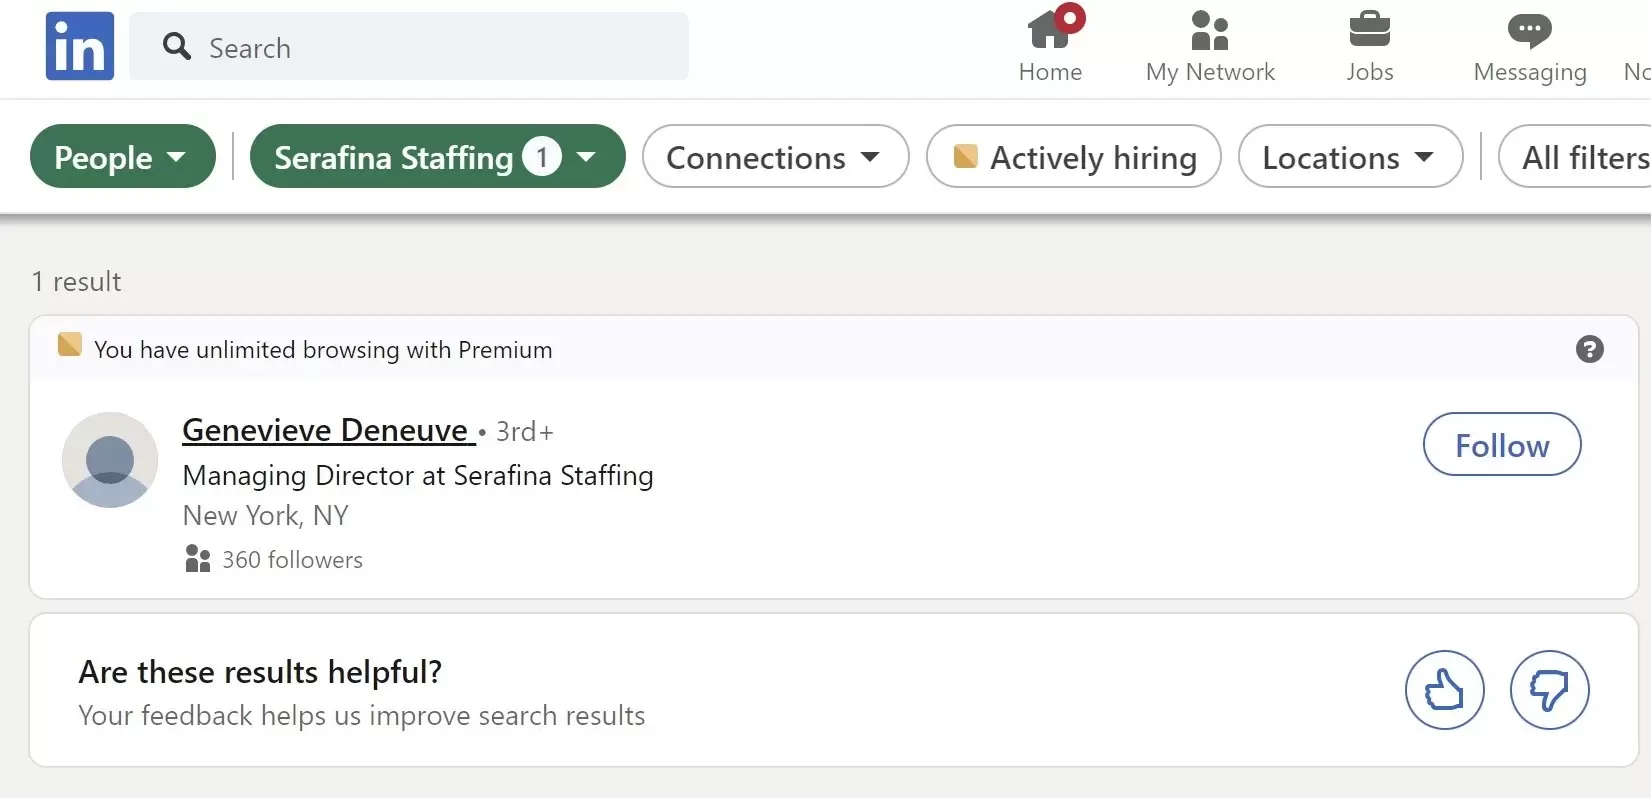 Serafina Staffing employee list